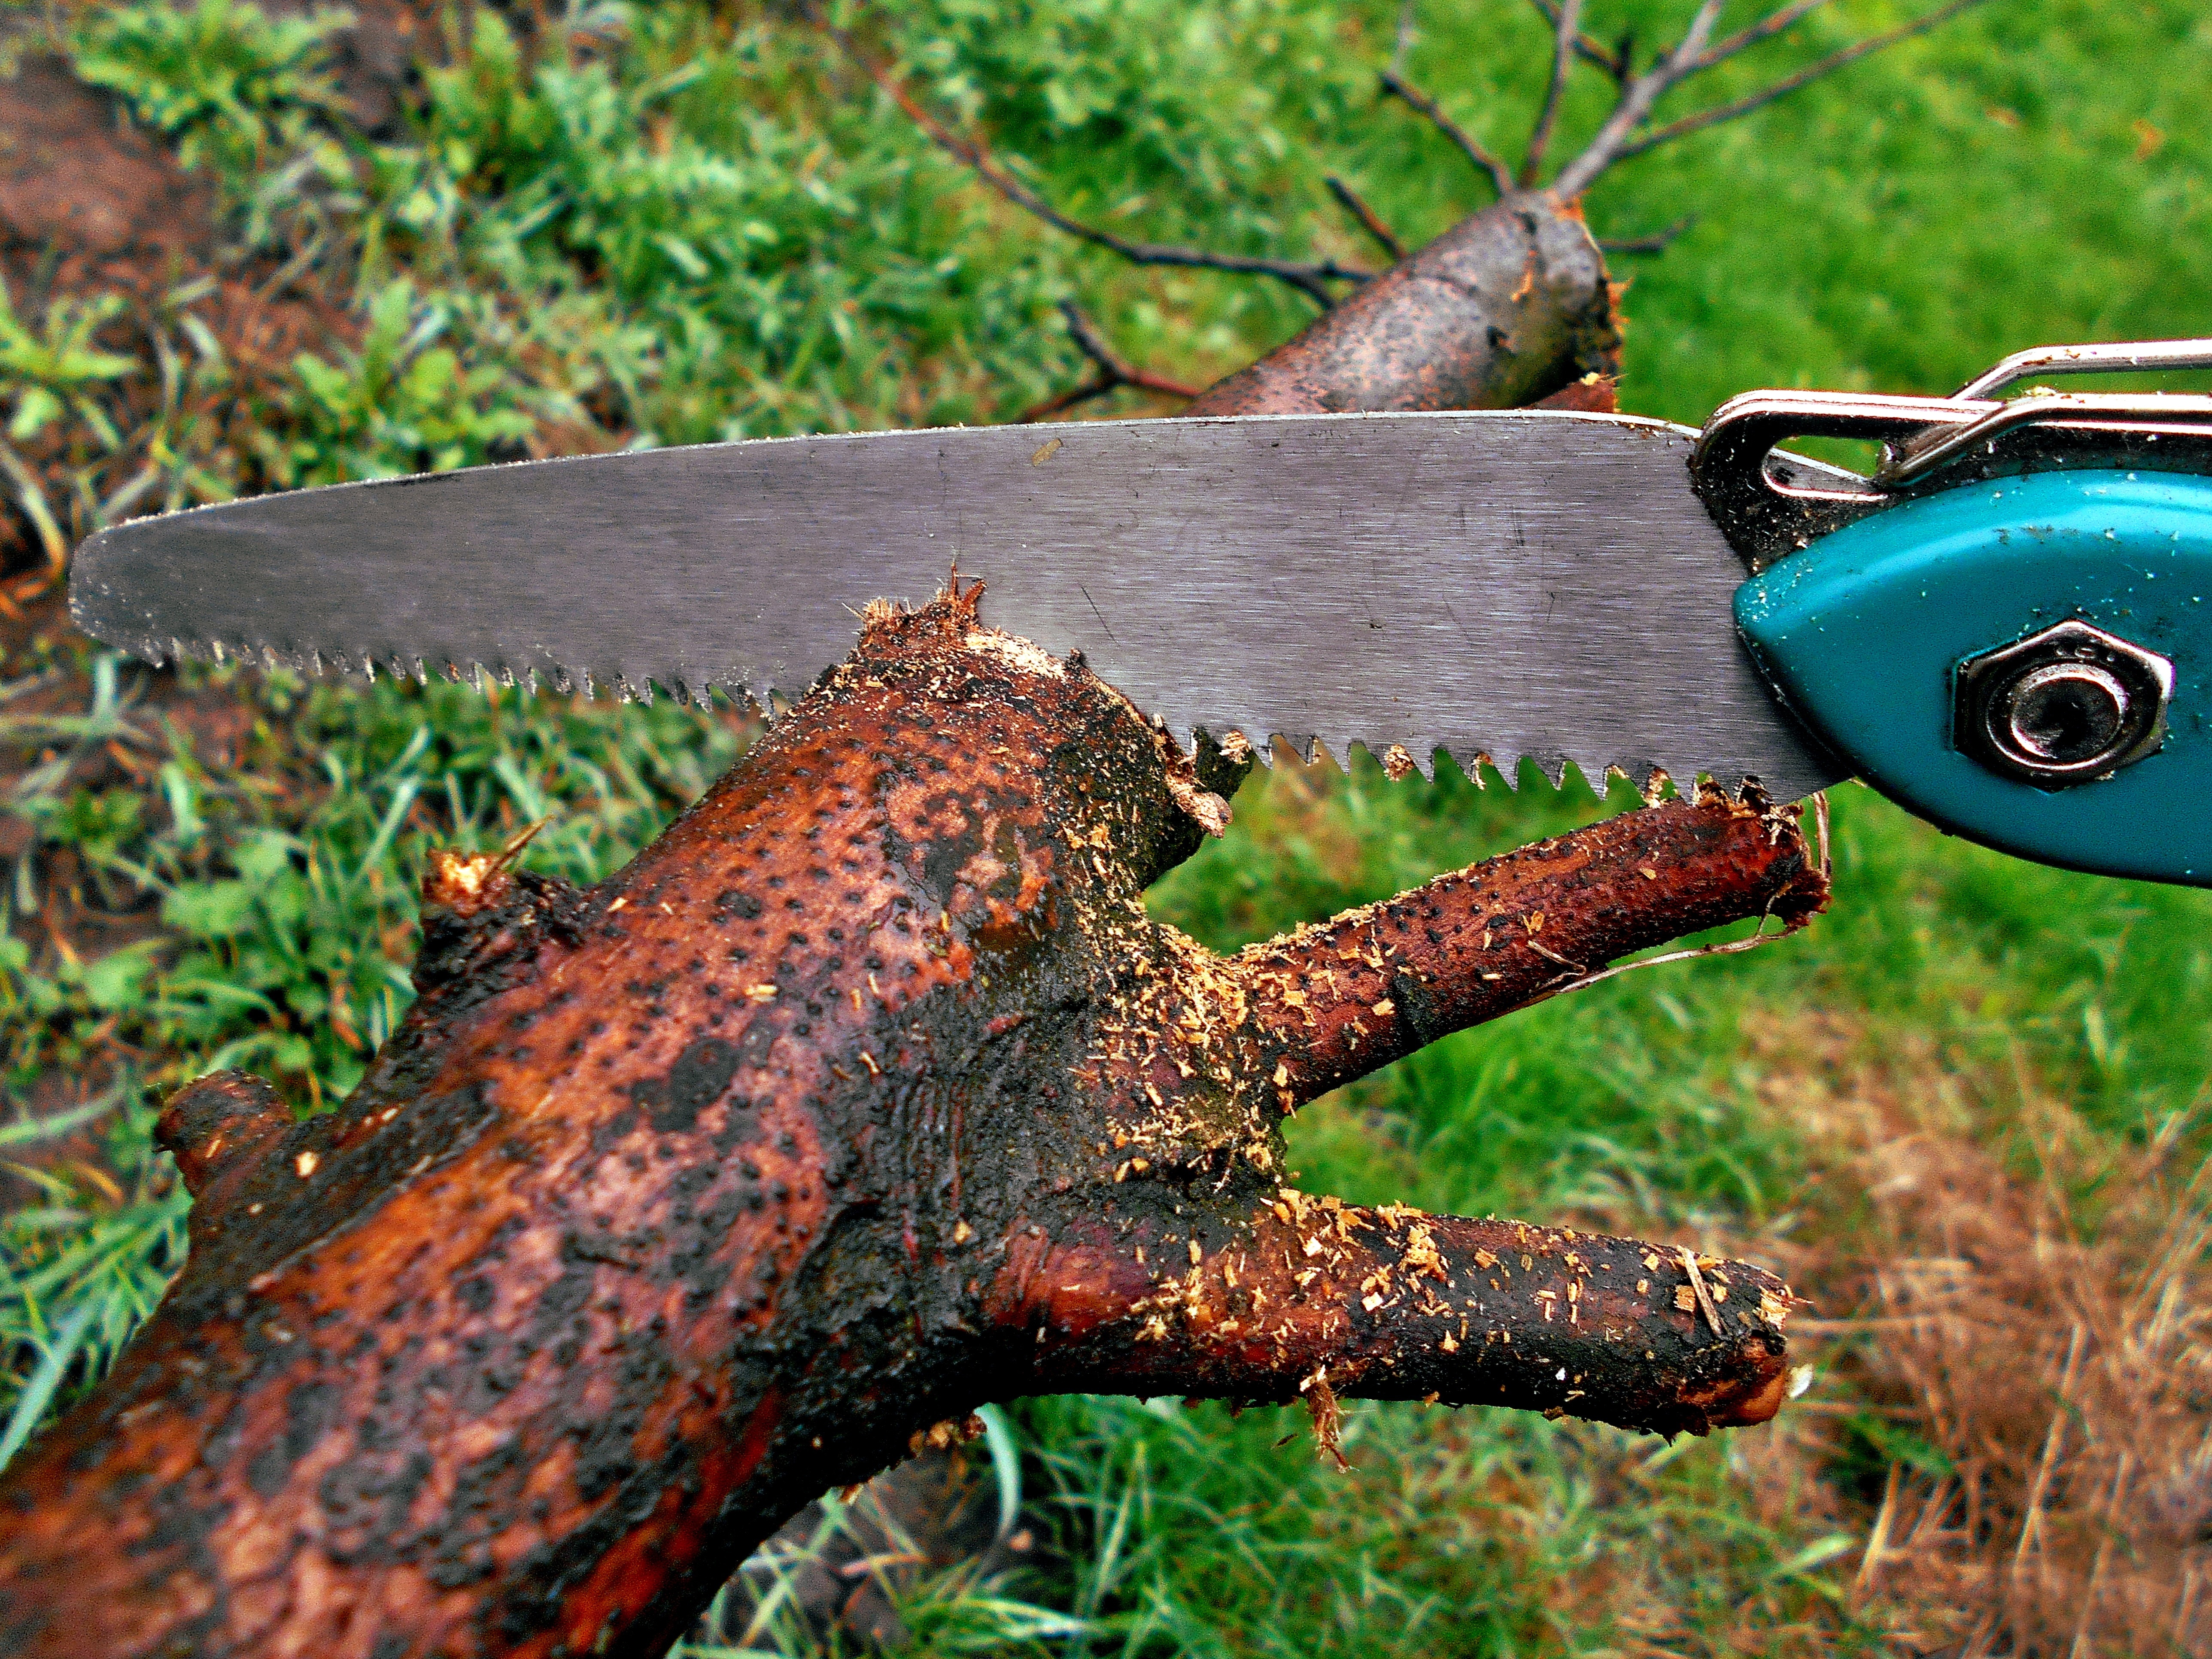 teal handle wood saw